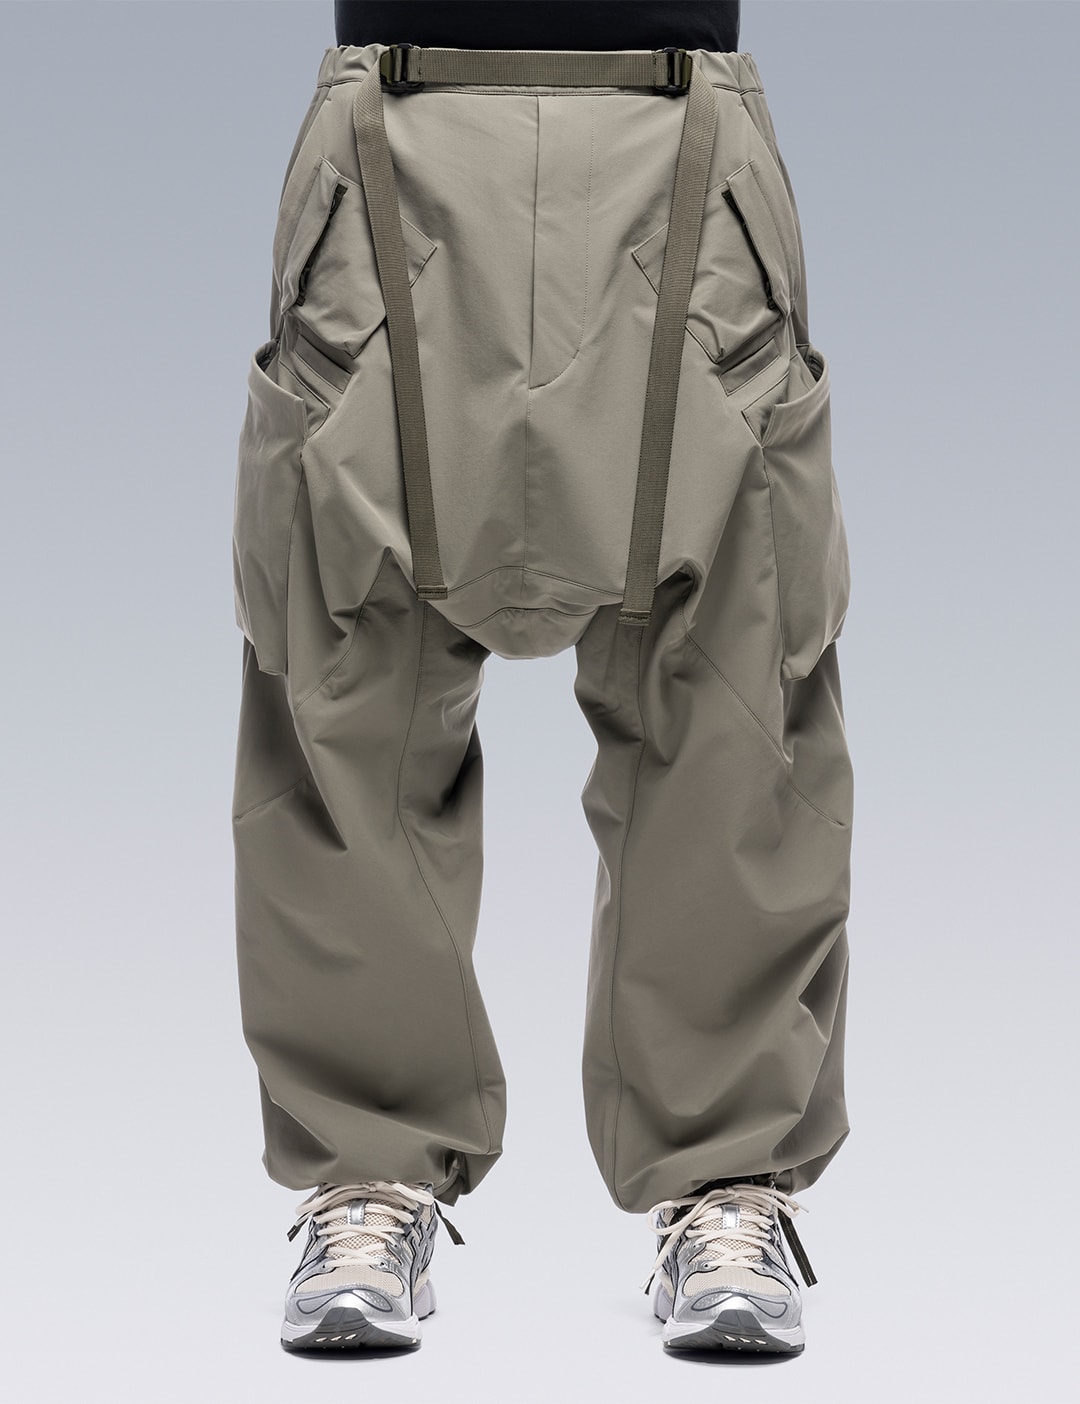 ACRONYM - Schoeller® Dryskin™ Articulated Pants | HBX - Globally ...